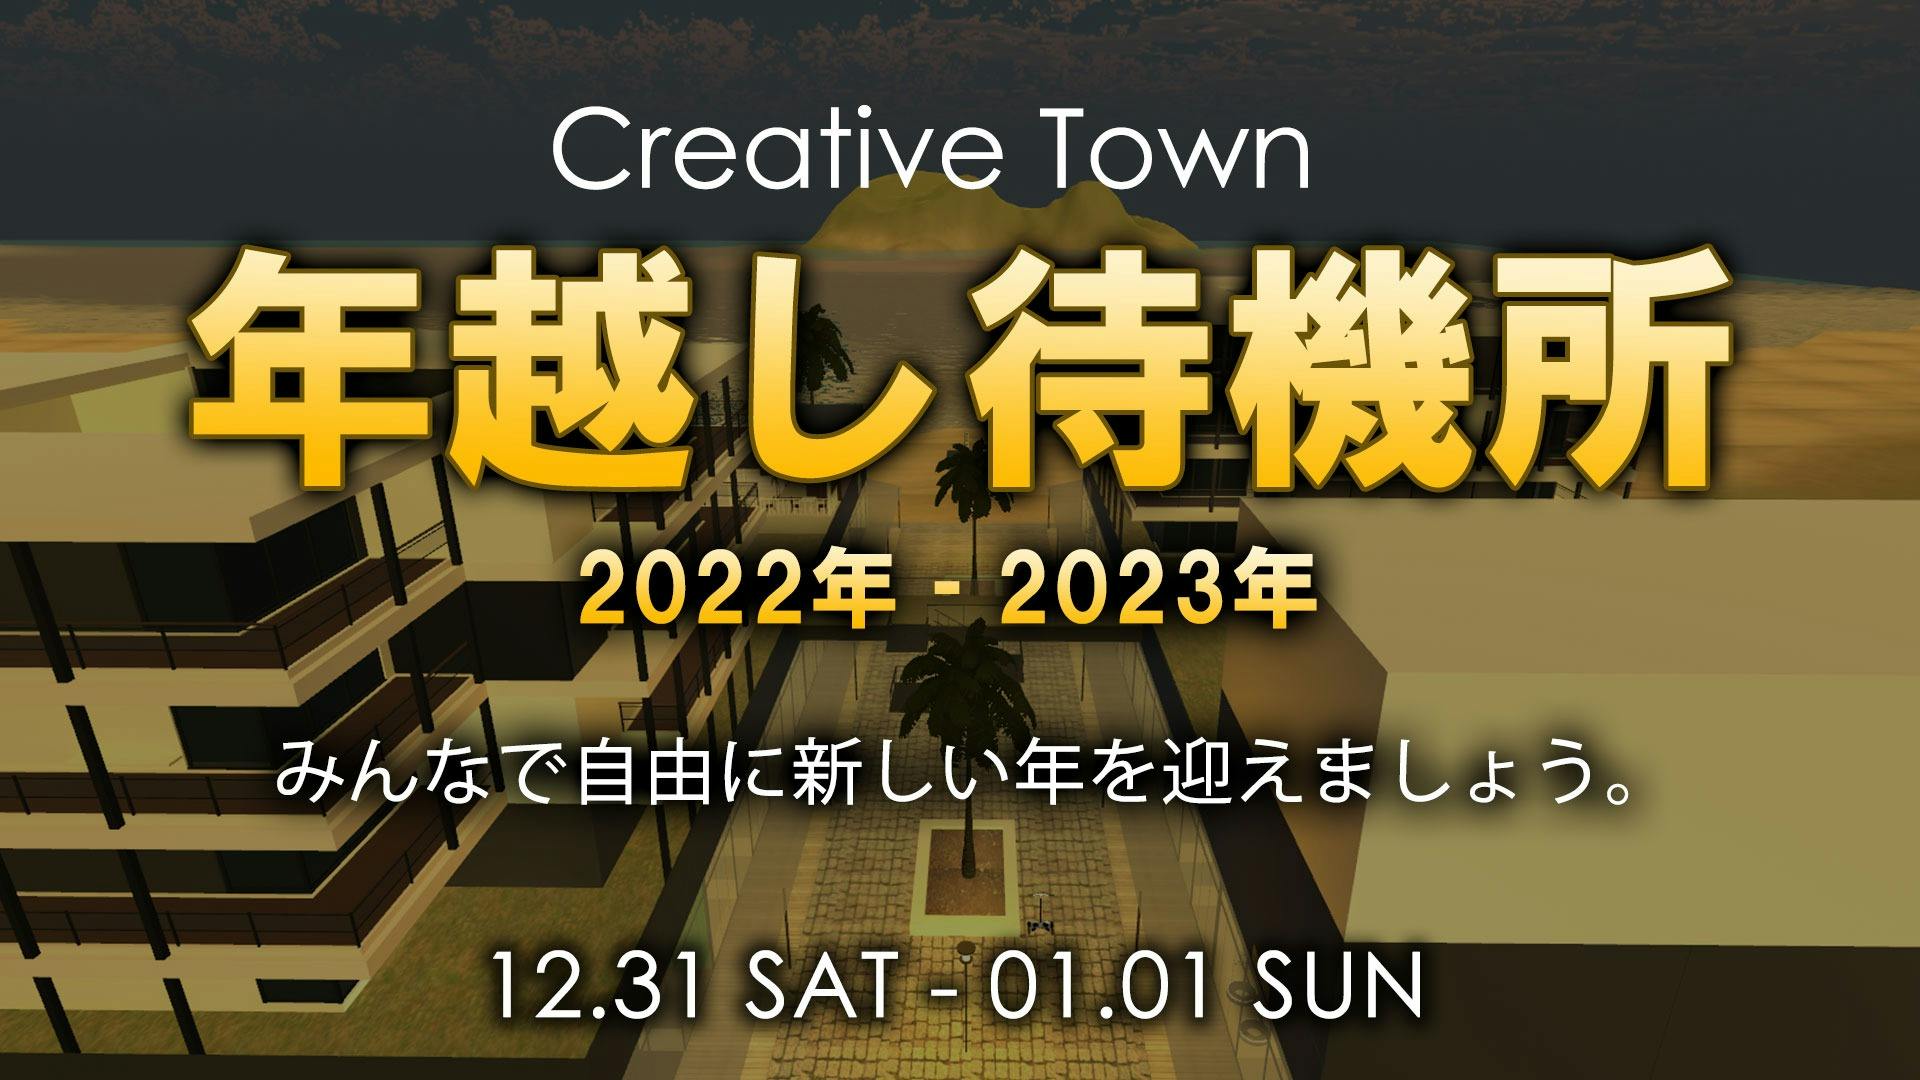 2022-2023 CREATIVE TOWN メタバース年越し待機所